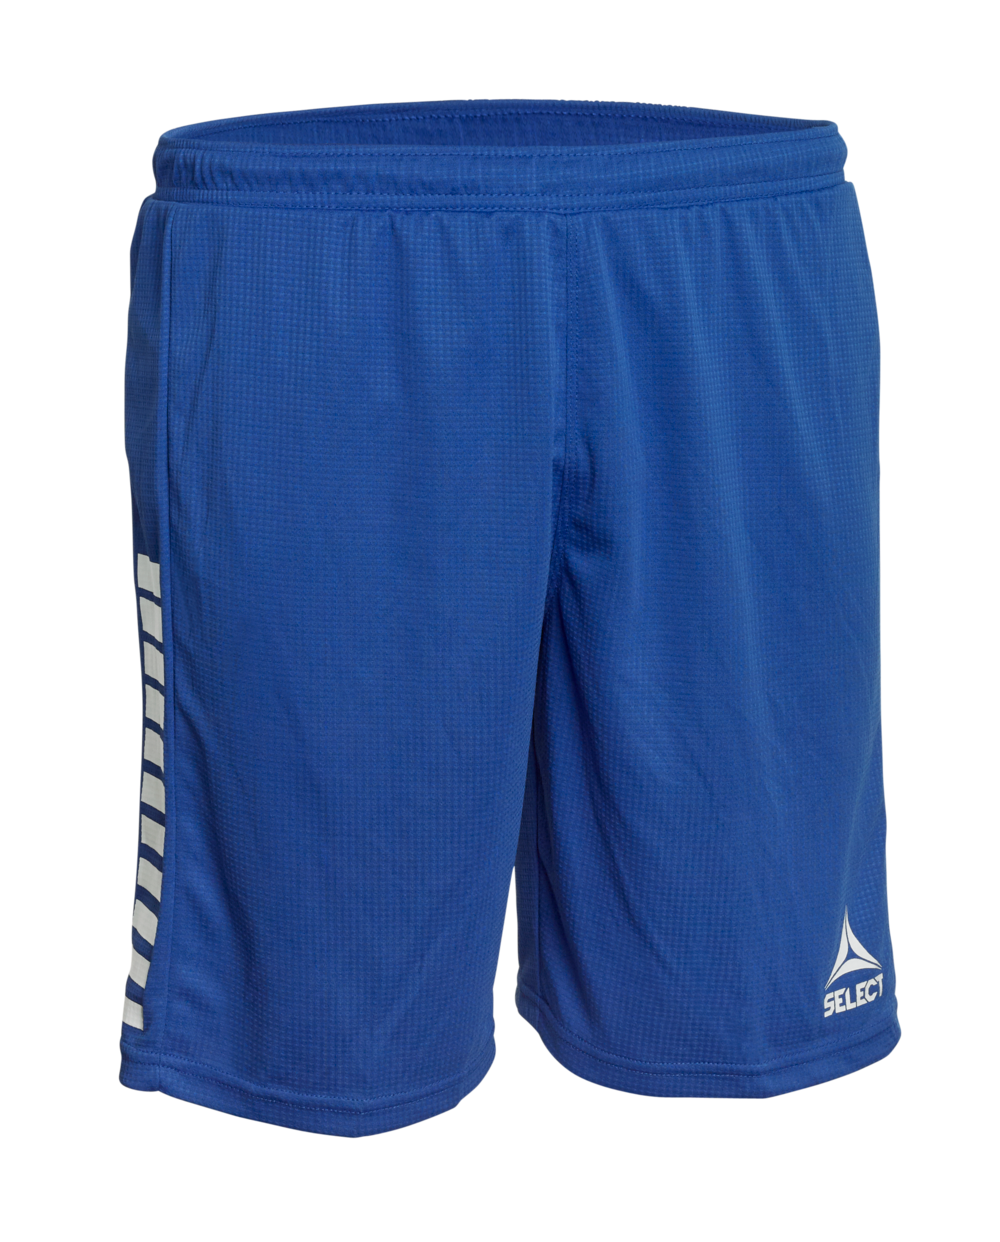 monaco_player_shorts_royale_blue